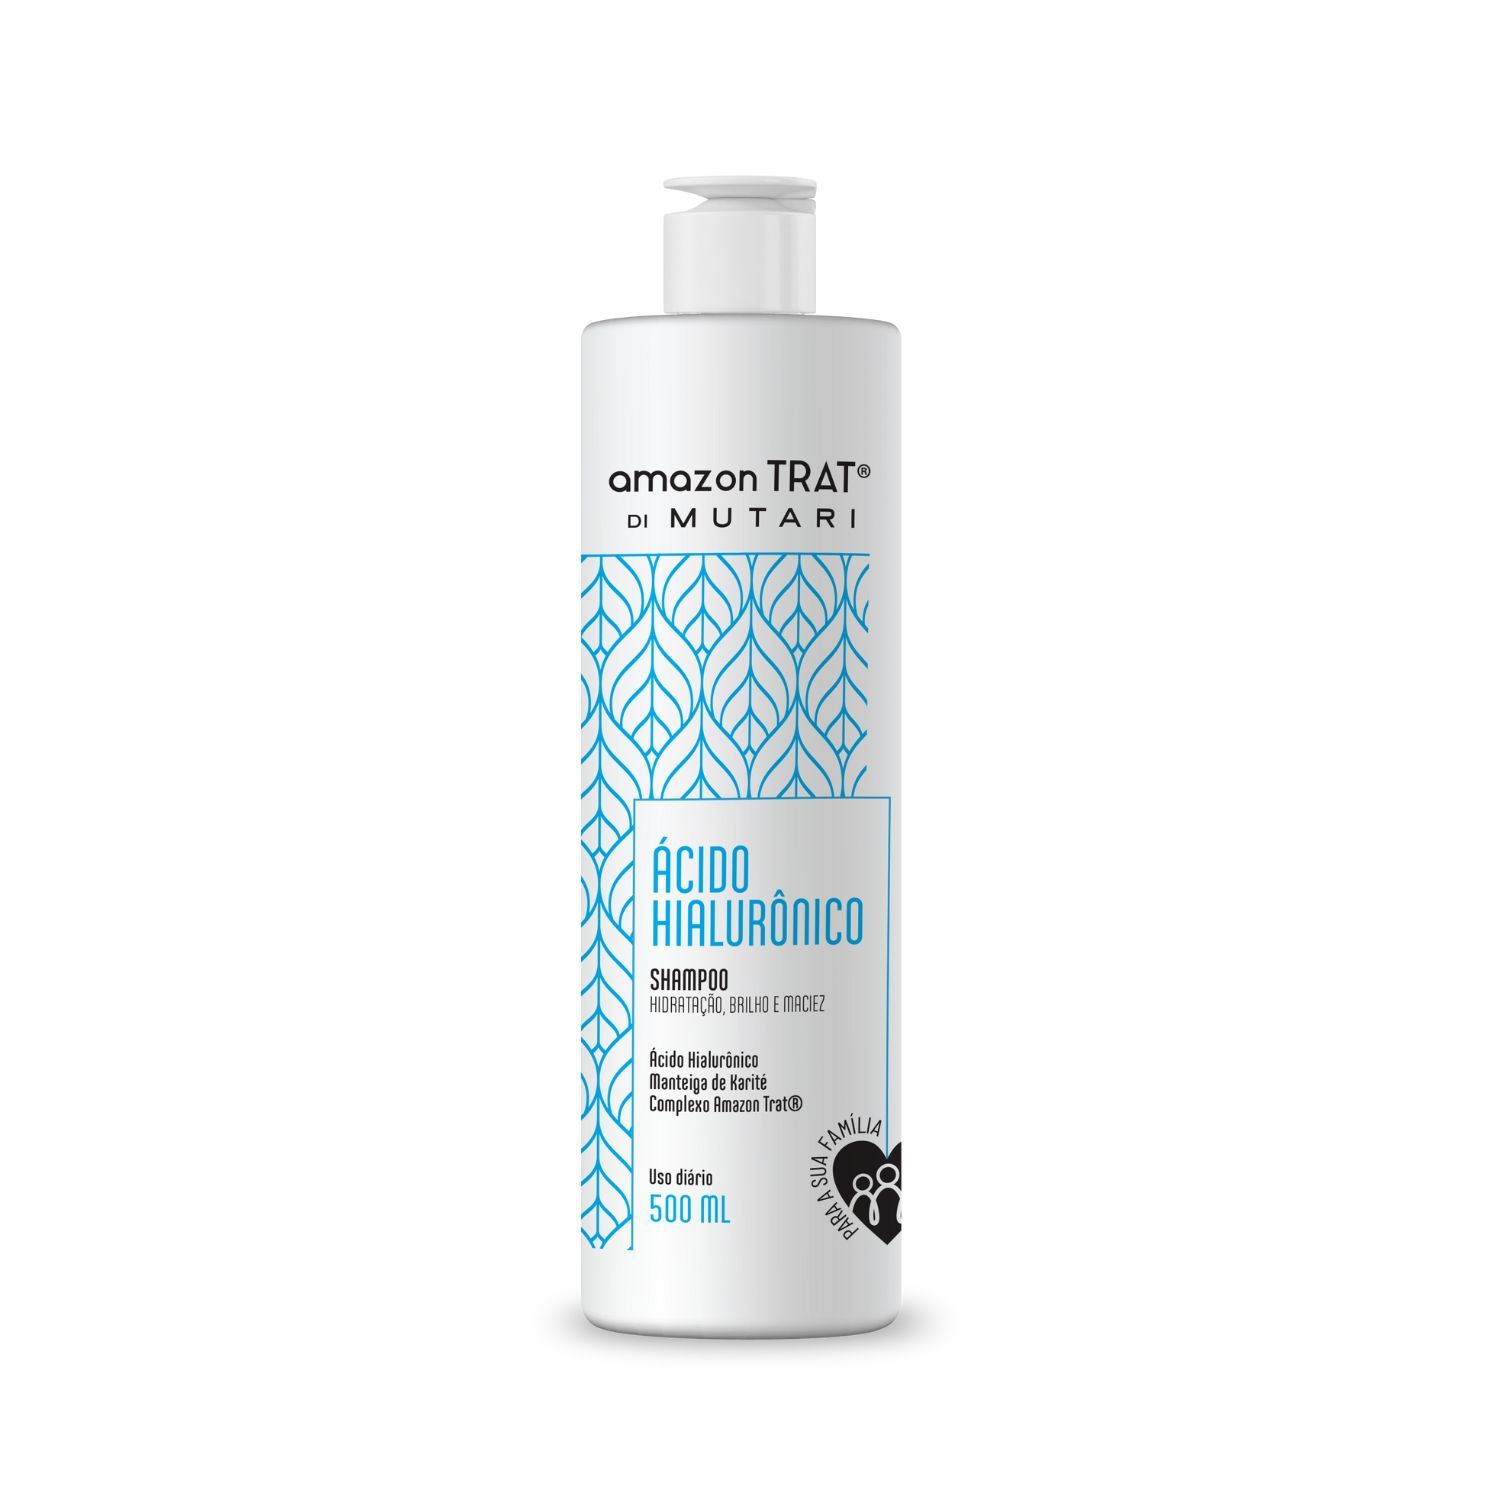 Shampoo Ácido Hialurônico Amazon Trat® Di Mutari - 500ml